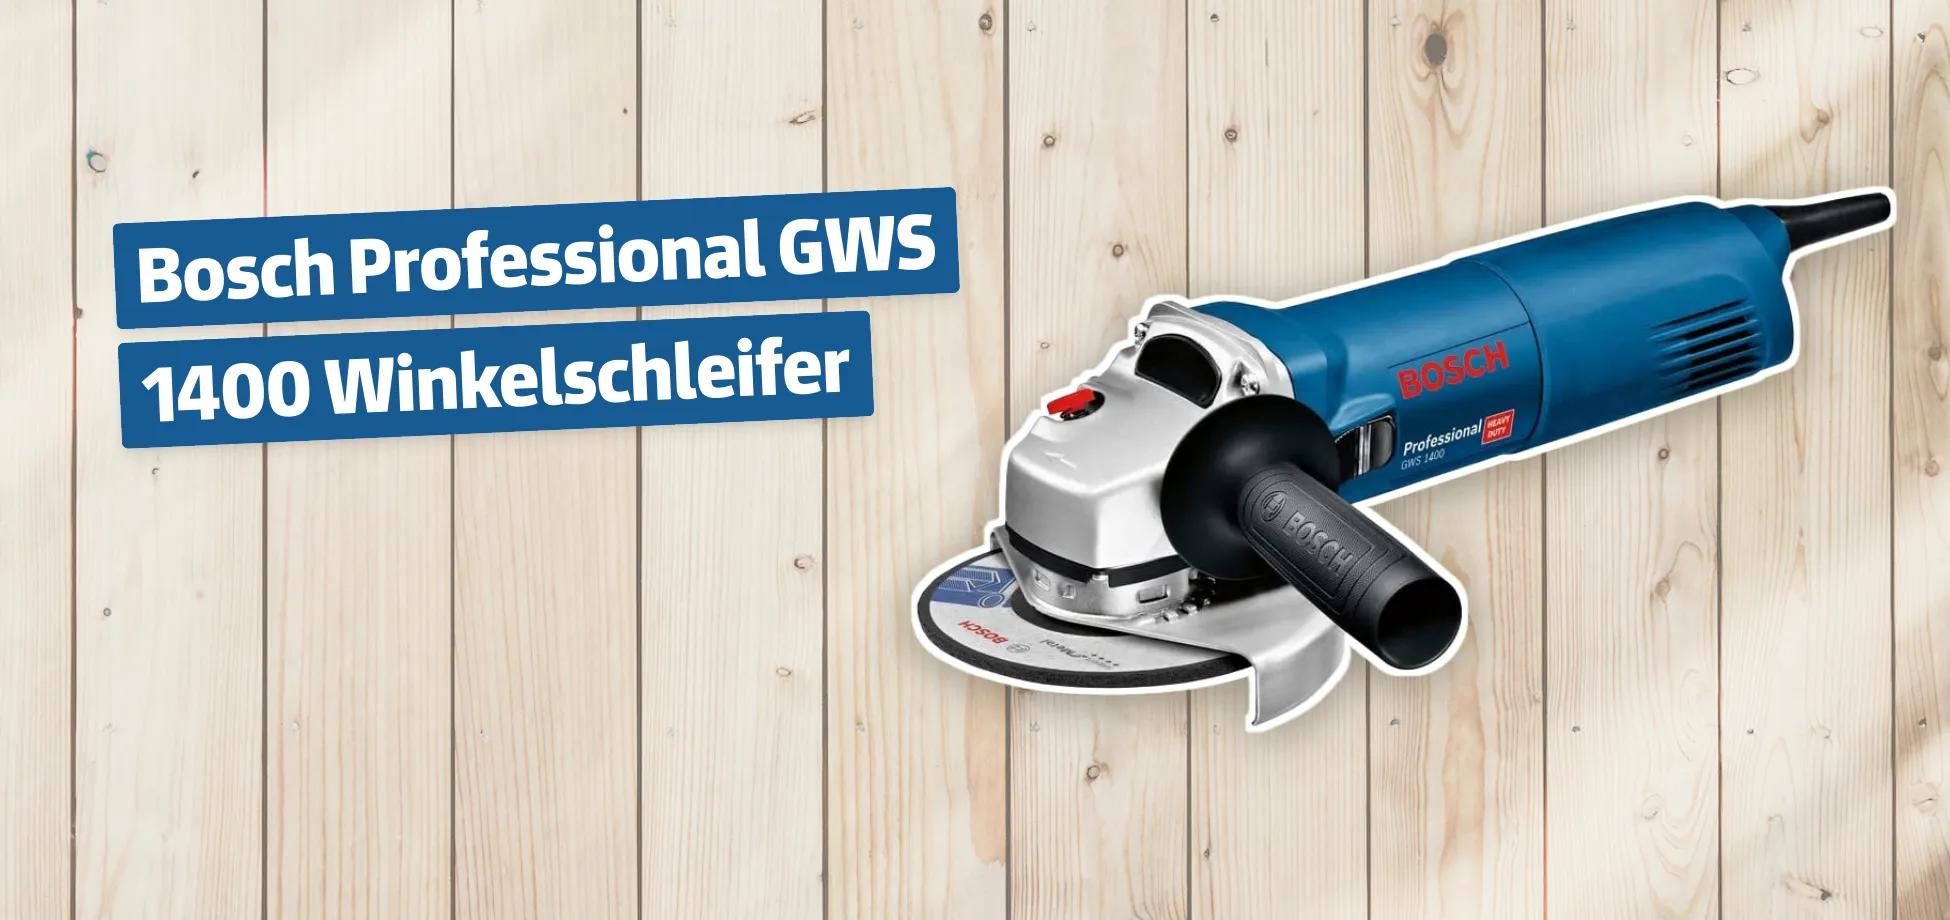 Bosch Professional GWS 1400 Winkelschleifer